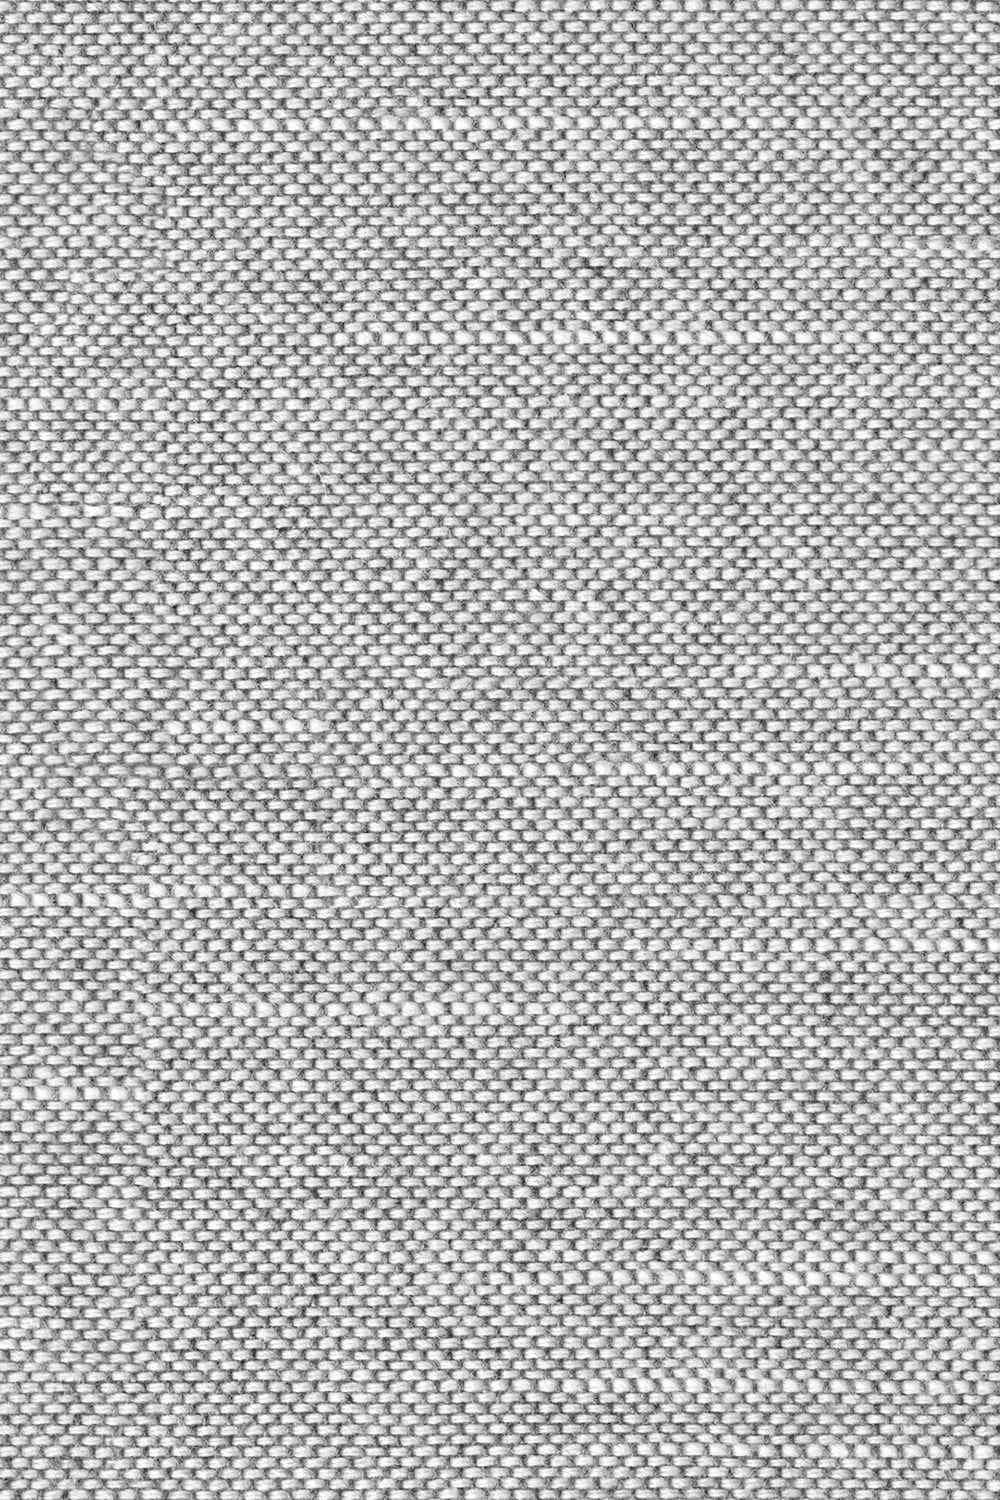 Light Grey Woven Tablecloth close-up